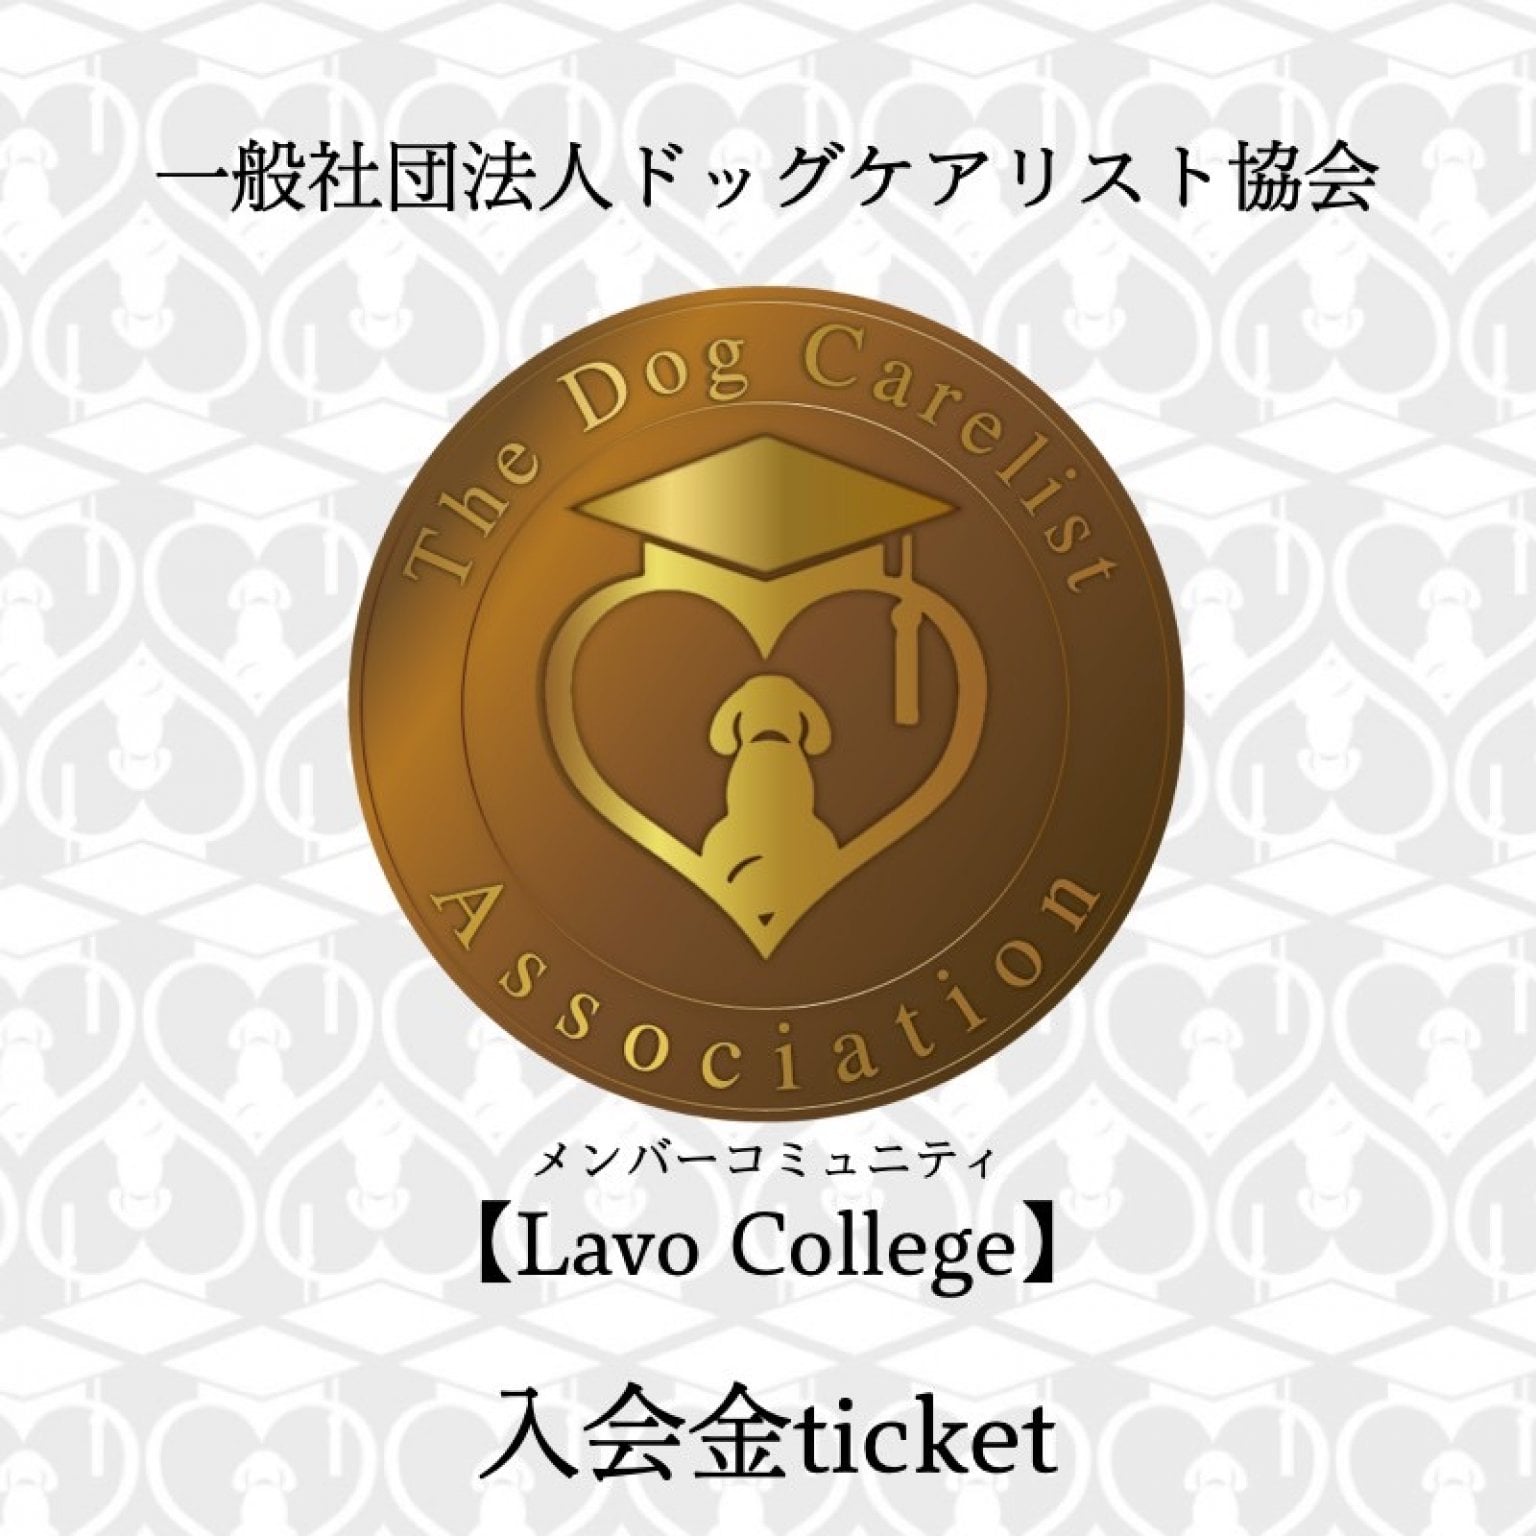 【Lavo College入会金】ドッグケアリスト協会メンバー入会金お支払い用チケット